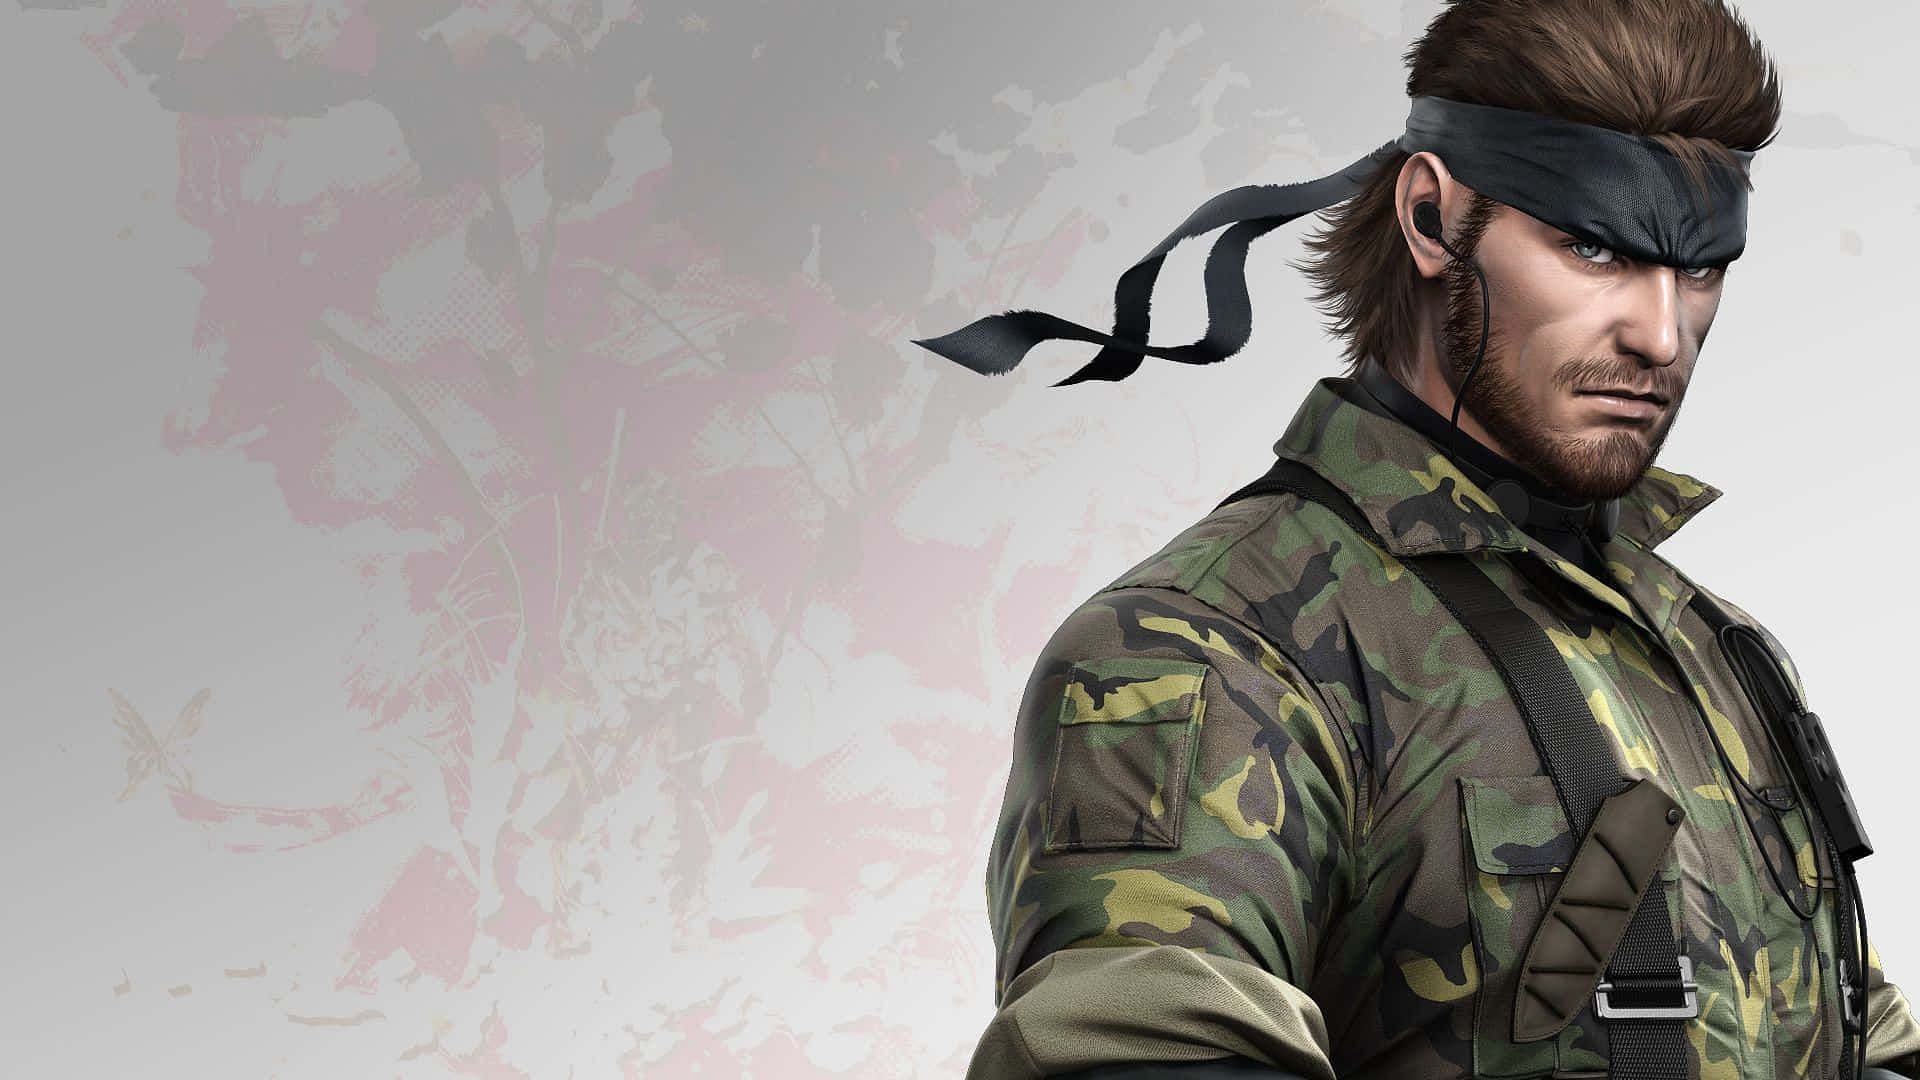 How To Get Solid Snake Skin NOW FREE In Fortnite! (Unlocked Metal Gear  Bundle) 